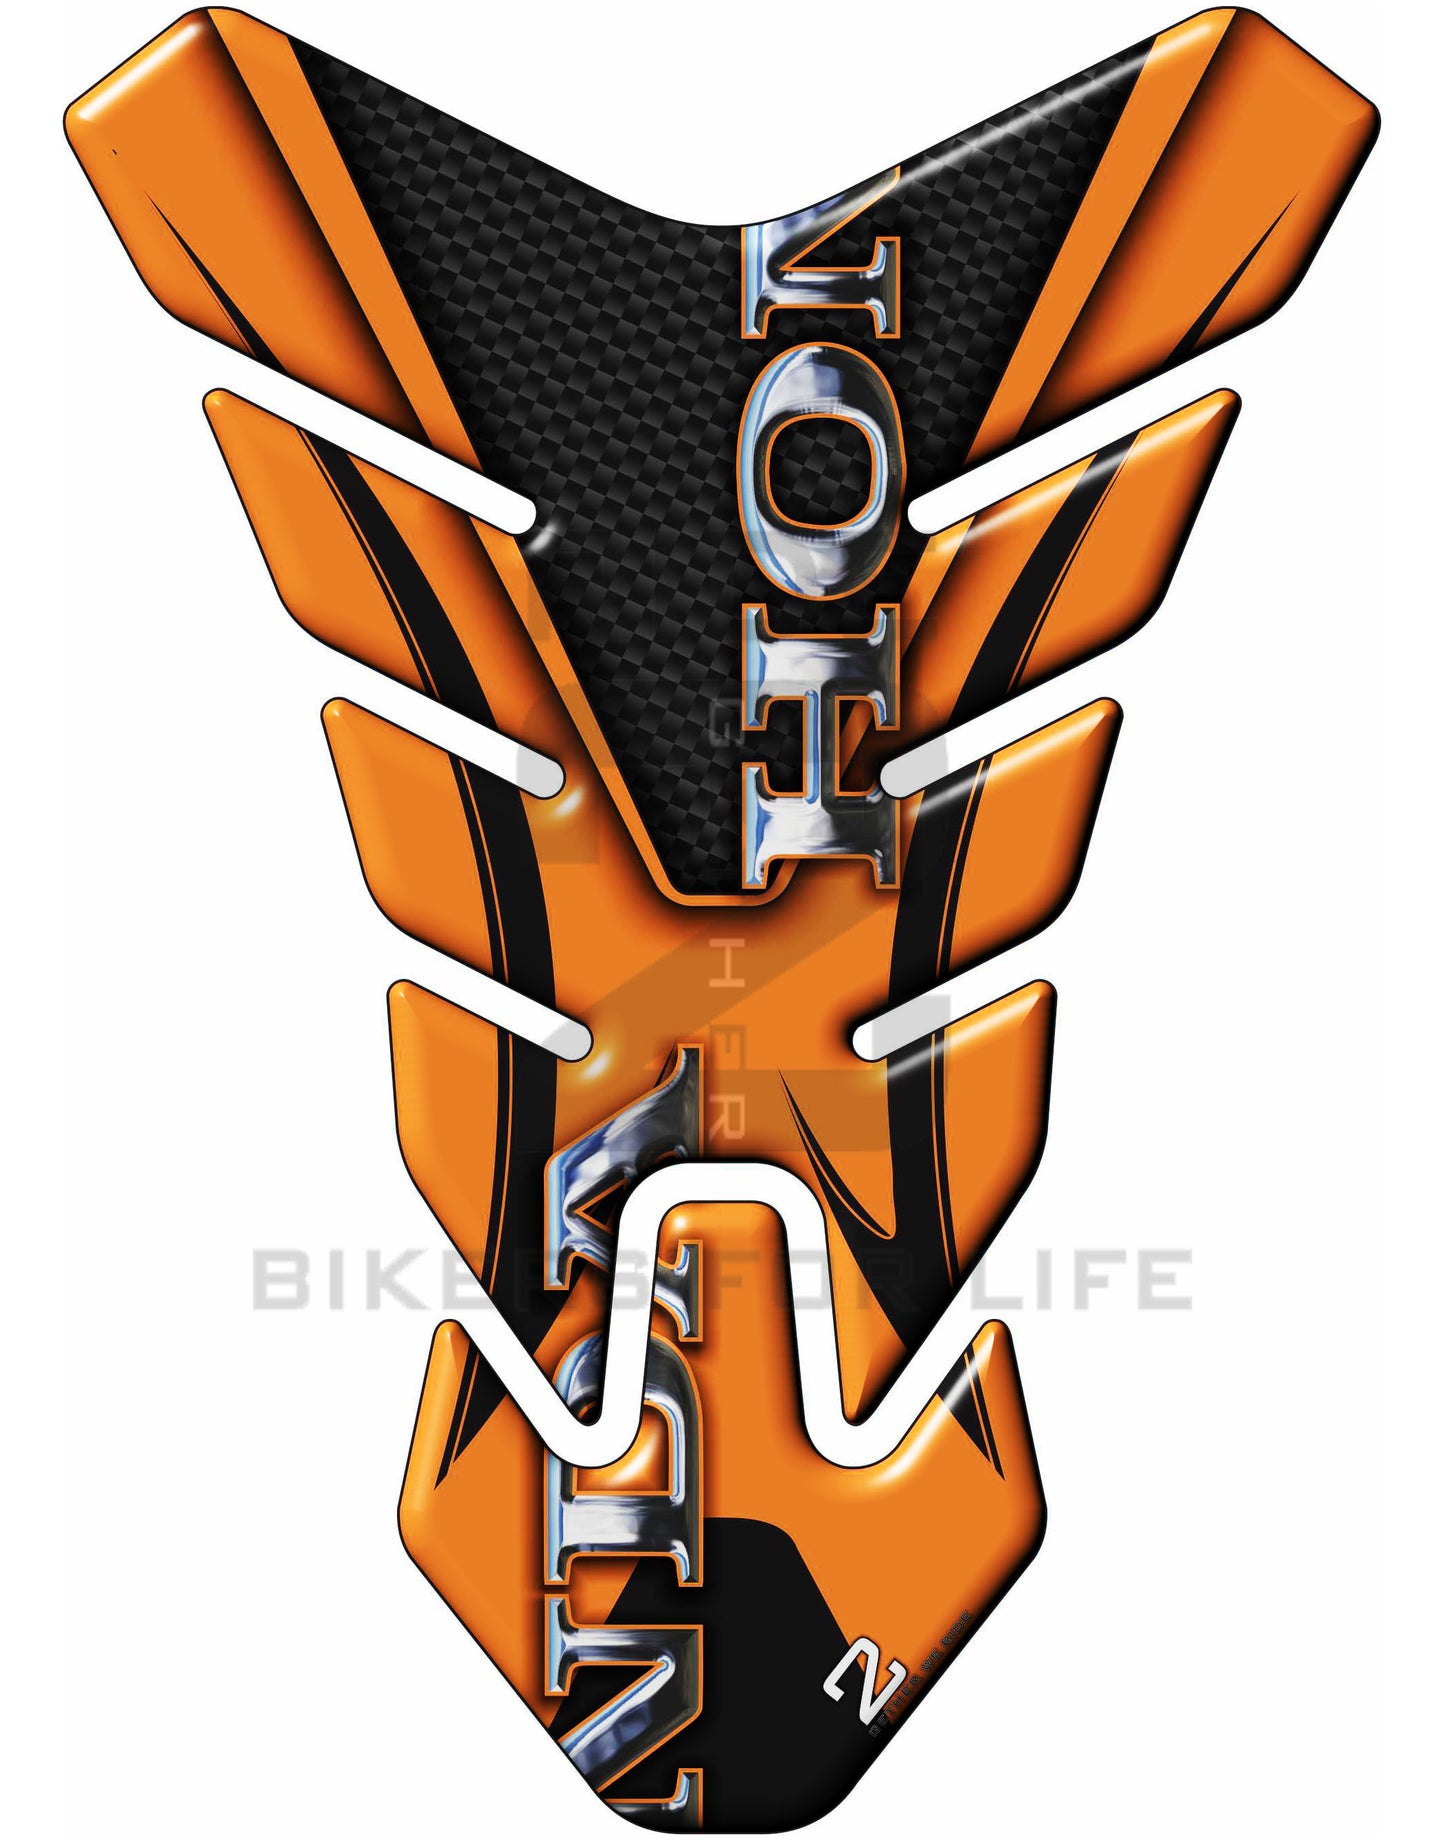 Motor Bike Tank Pad- Honda CBR, NC Series, CB Series, Twin Africa - Orange and Black CBR Protective Tank Pad. Universal Fit.